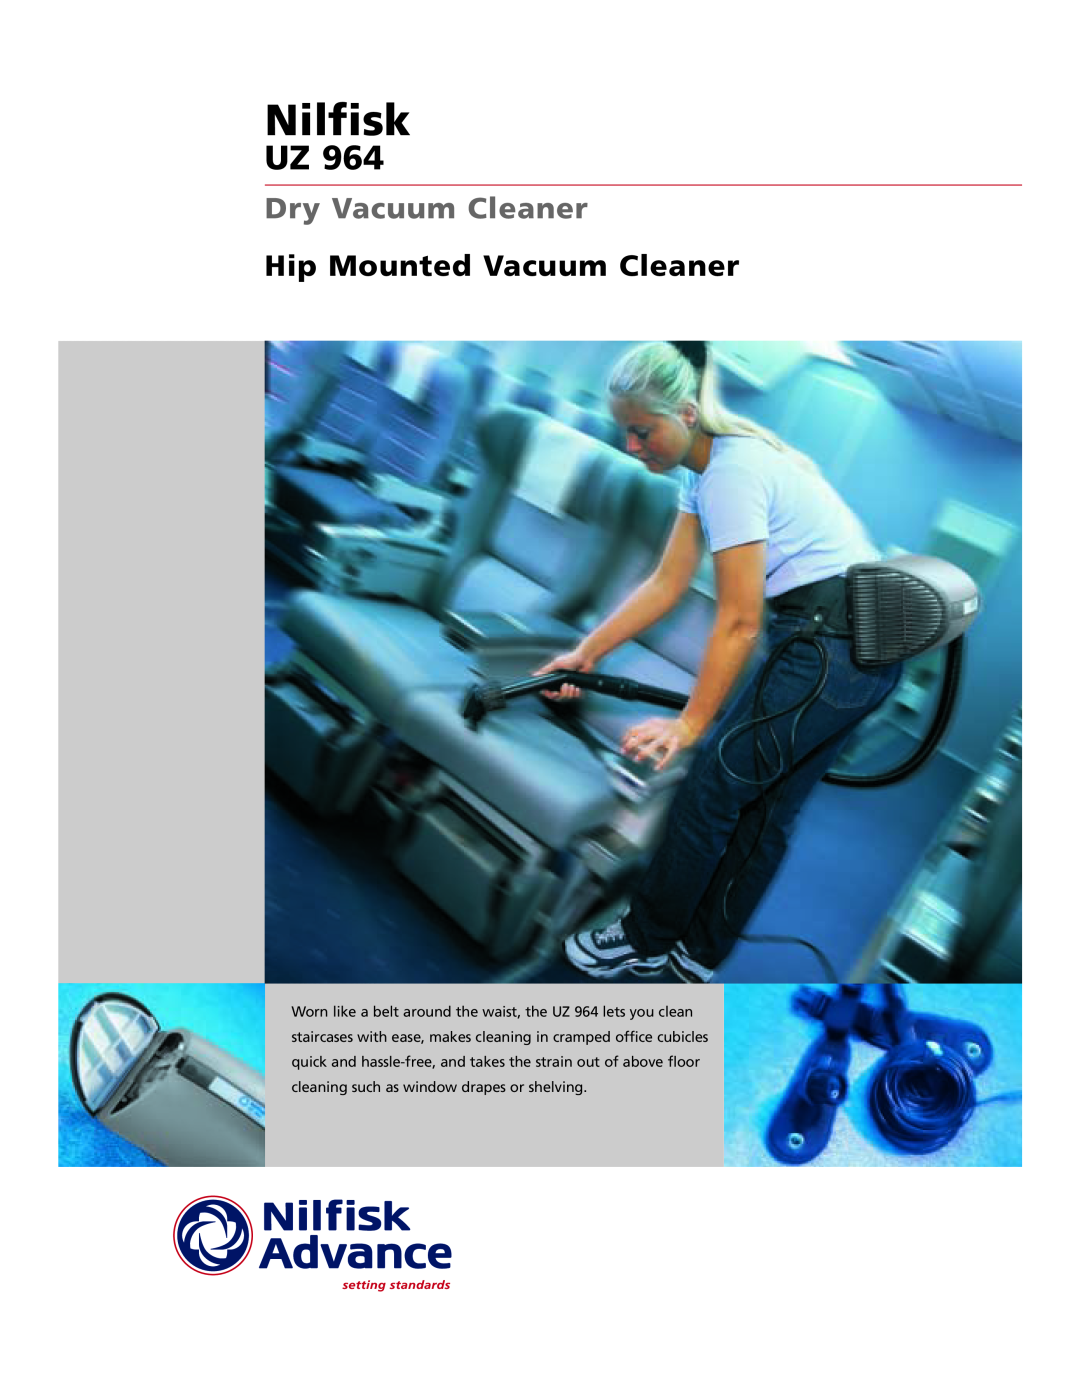 Nilfisk-Advance America UZ 964 manual Nilfisk, Dry Vacuum Cleaner, Hip Mounted Vacuum Cleaner 